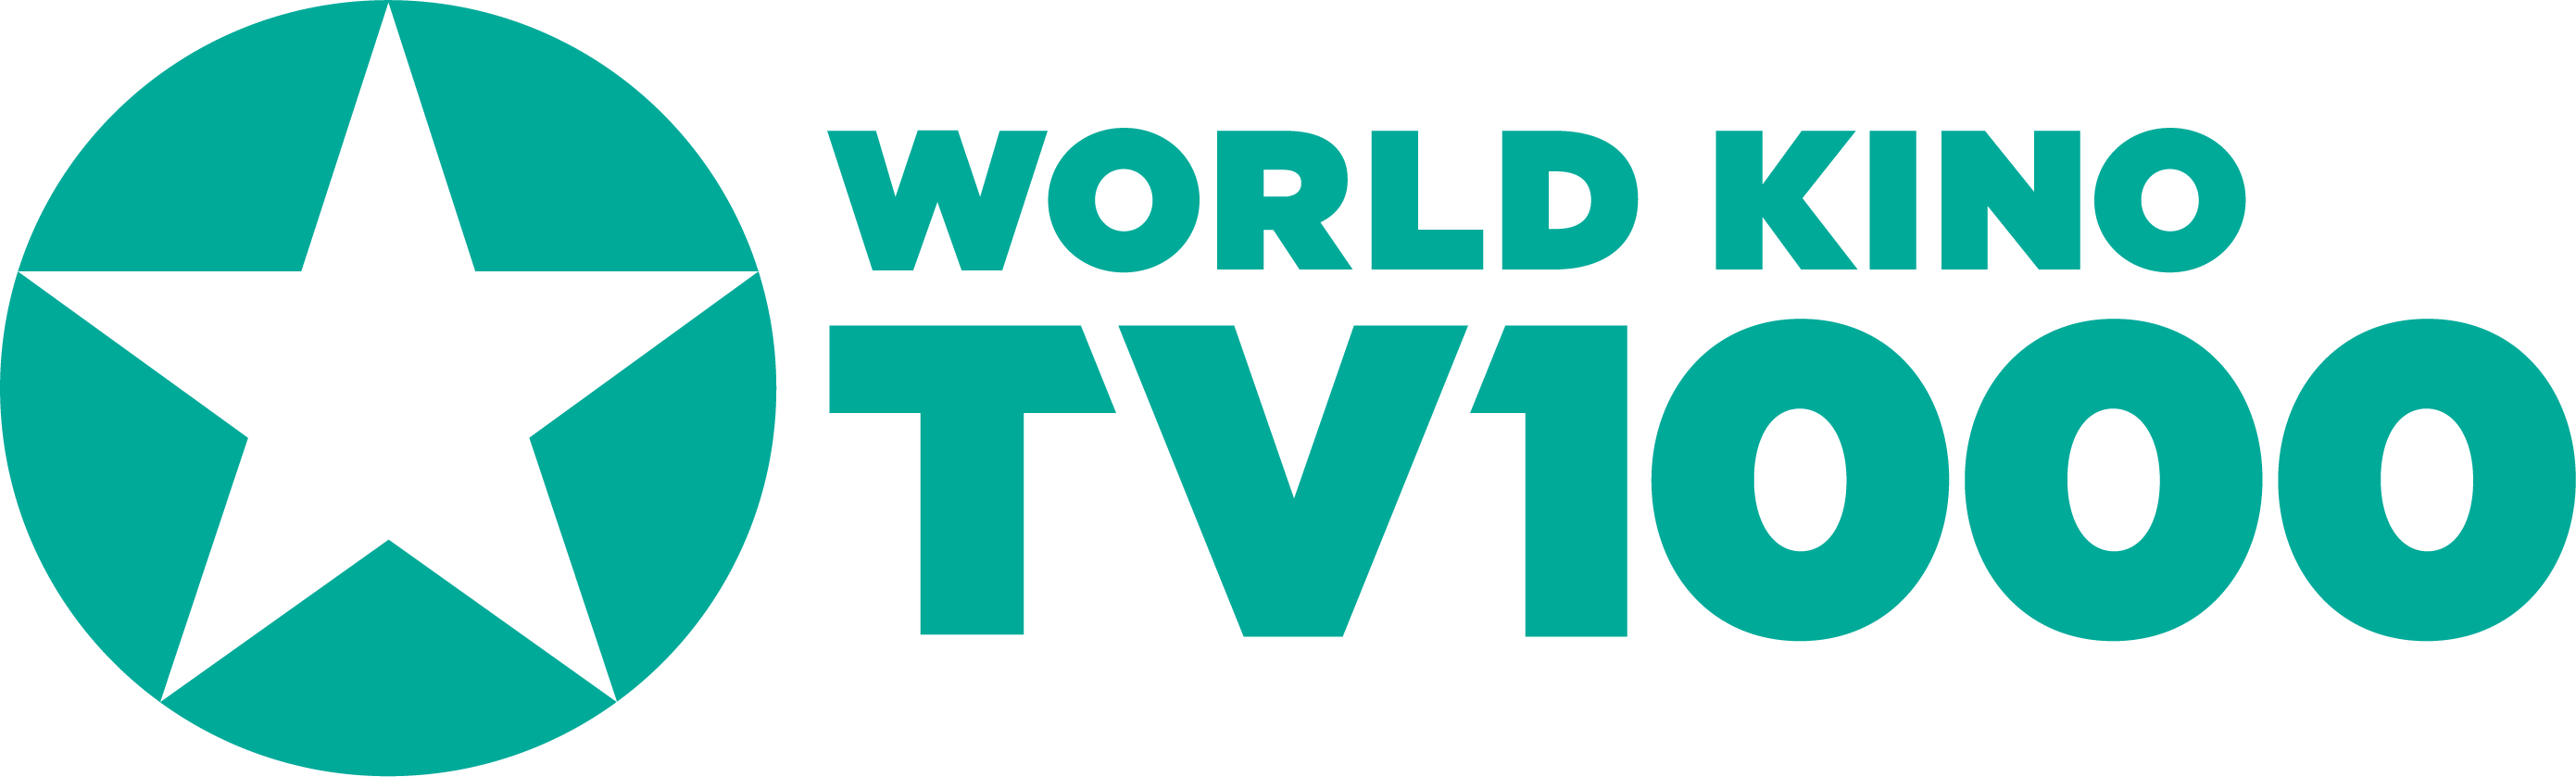 TV 1000 World Kino